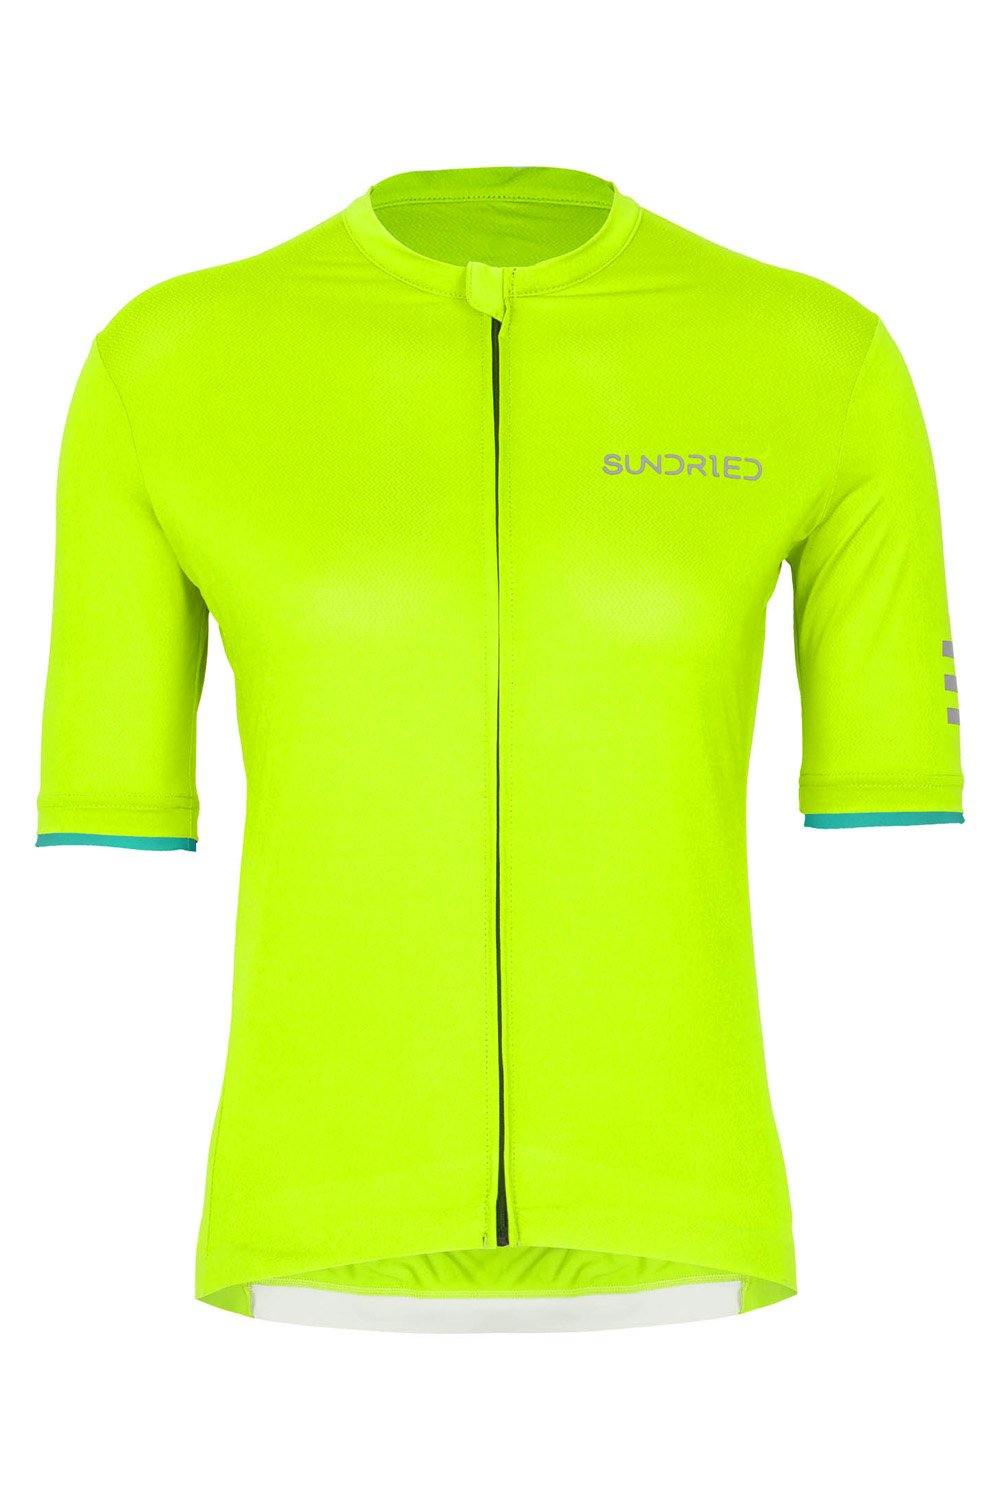 Sundried Apex Women's Short Sleeve Cycle Jersey Short Sleeve Jersey S Green SD0340 S Green Activewear